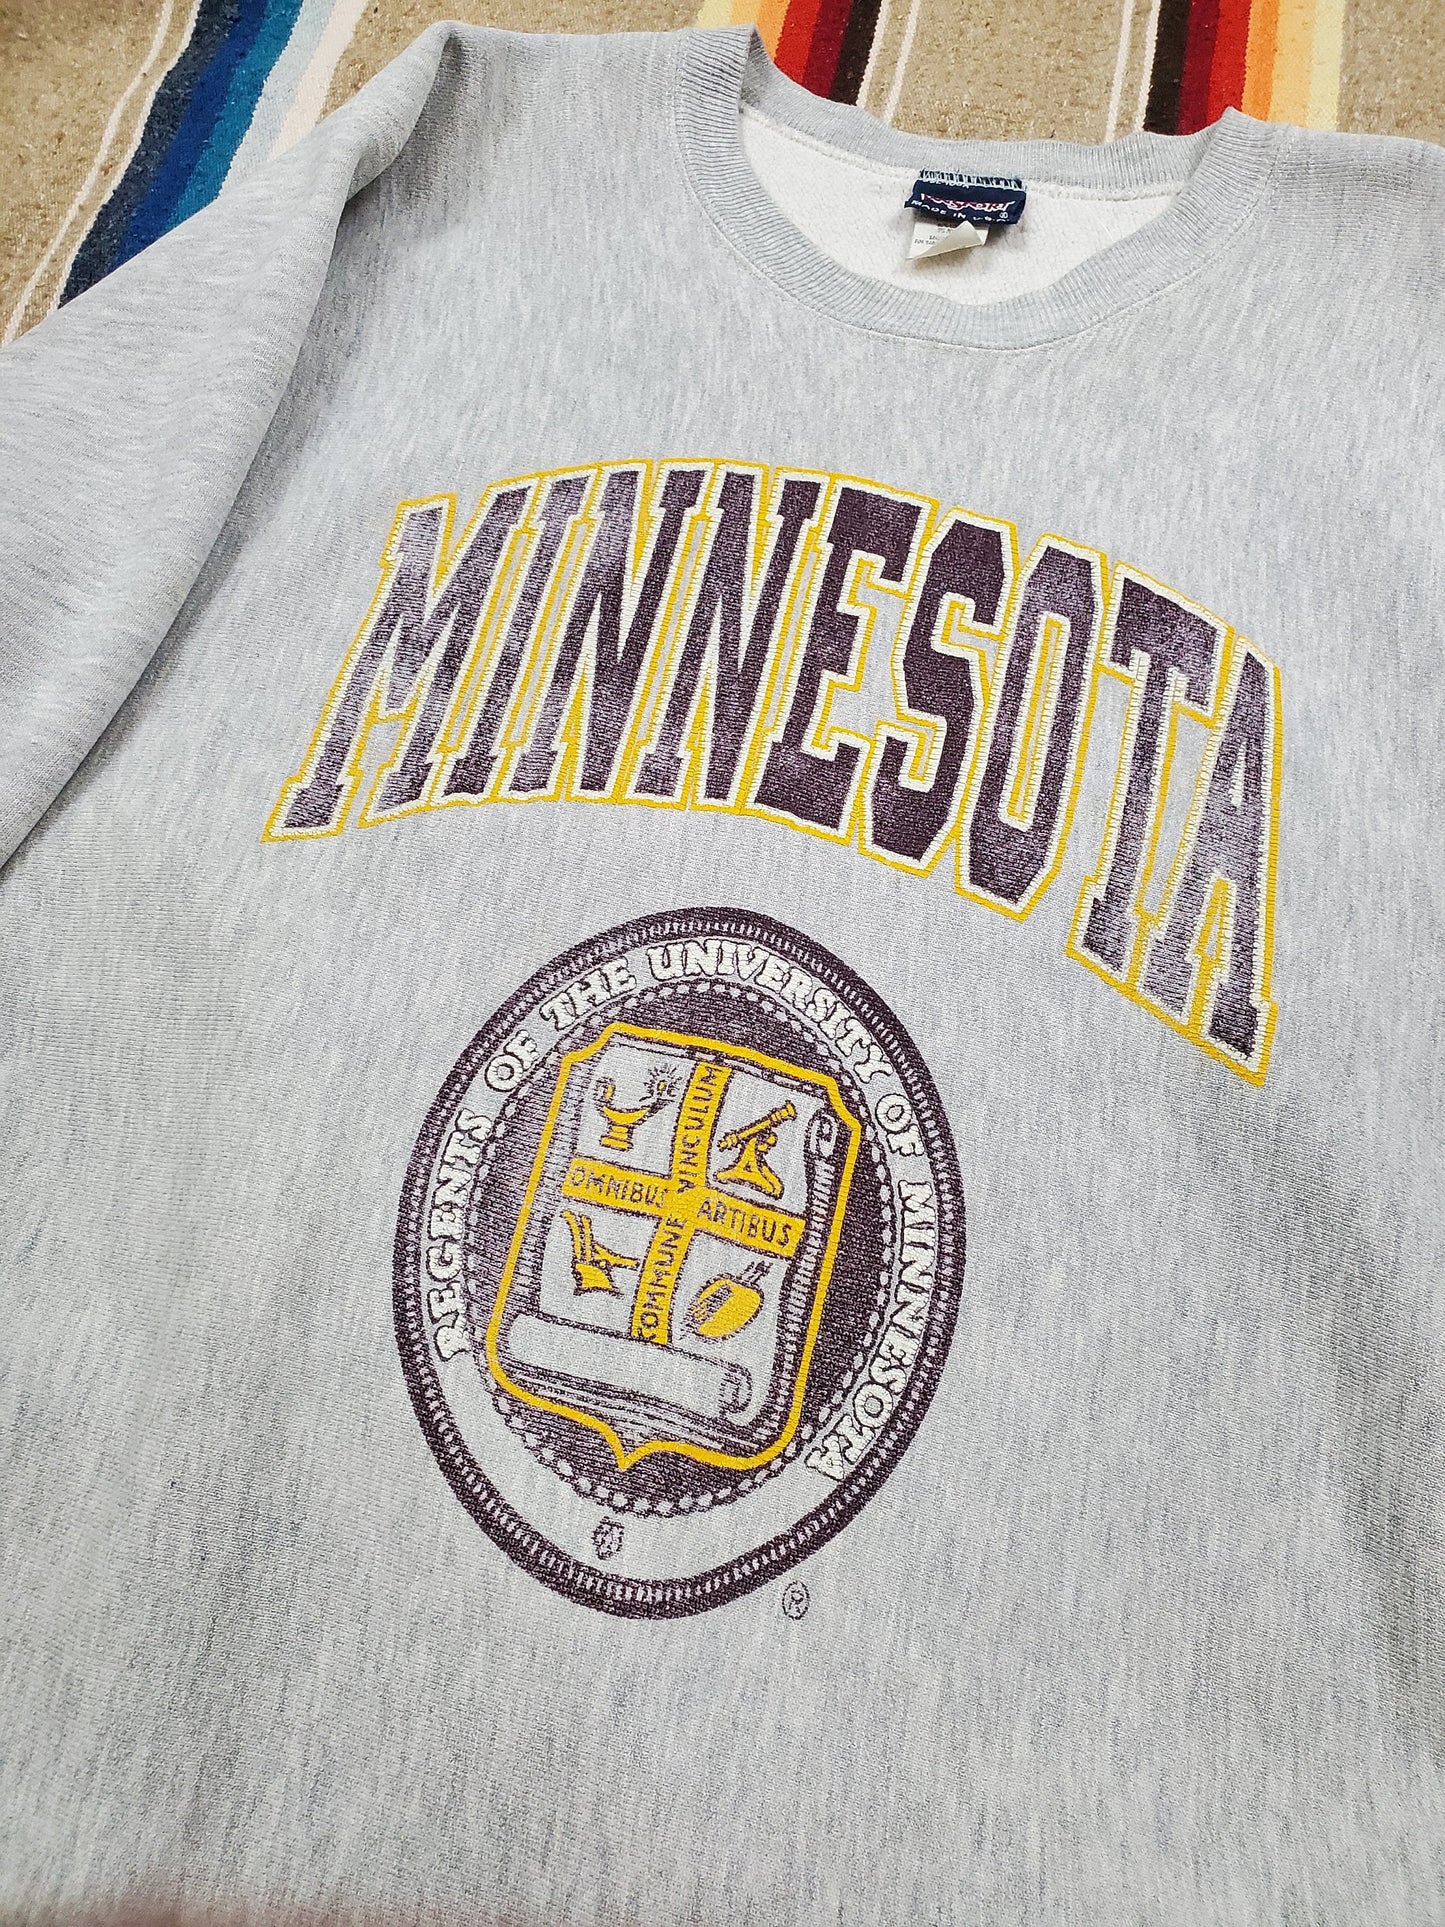 1980s/1990s Jansport University of Minnesota Reverse Weave Style Sweatshirt Made in USA Size L